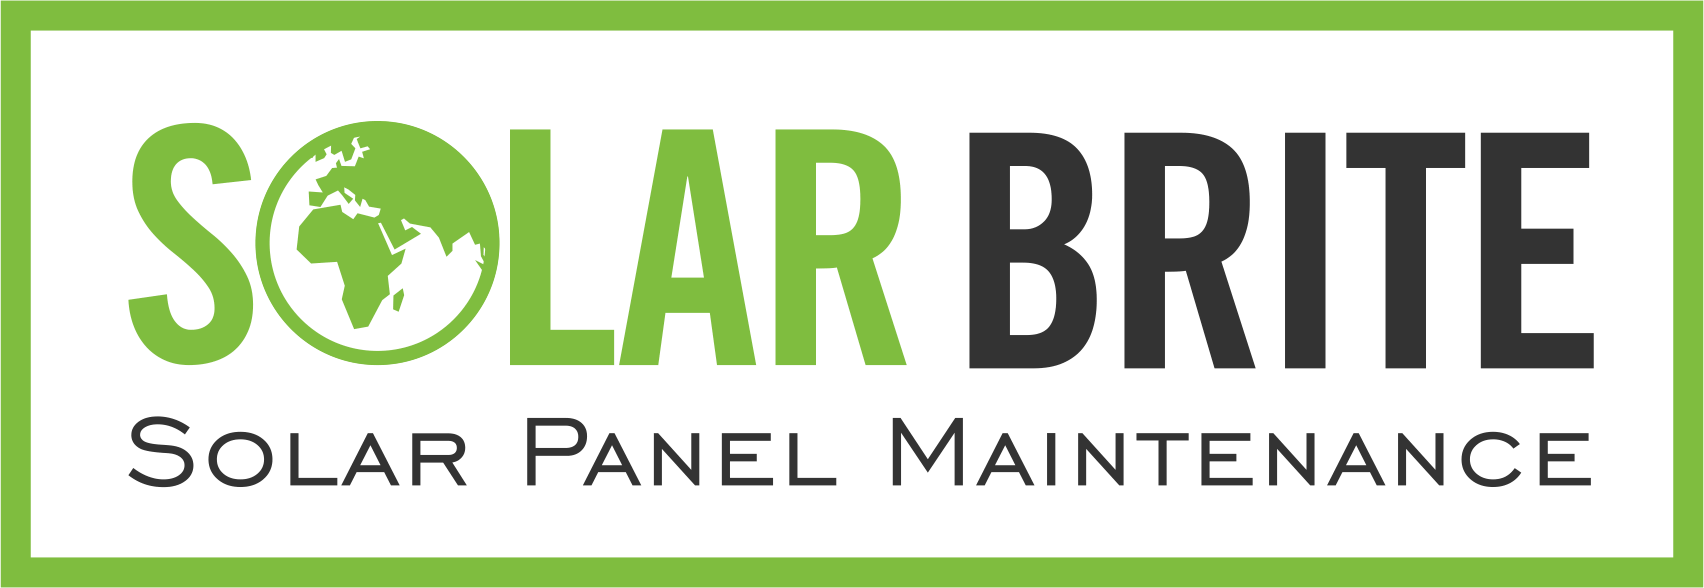 Solar Brite logo